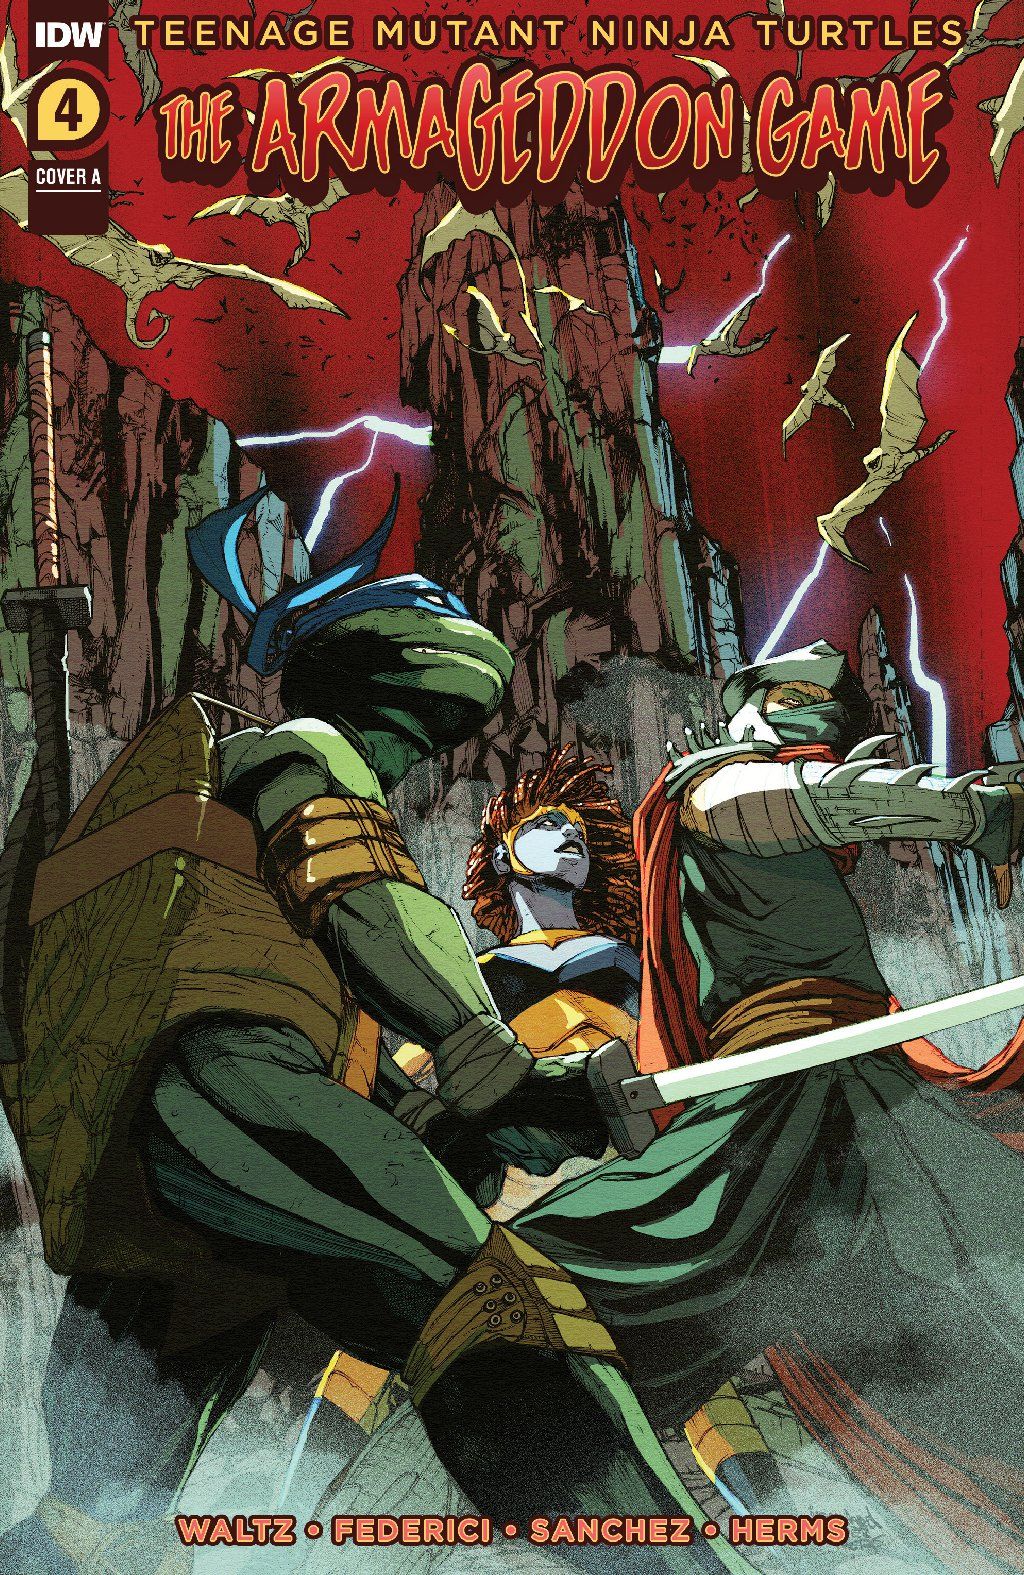 Rat King, Teenage Mutant Ninja Turtles (TMNT), in O. M. Winters's